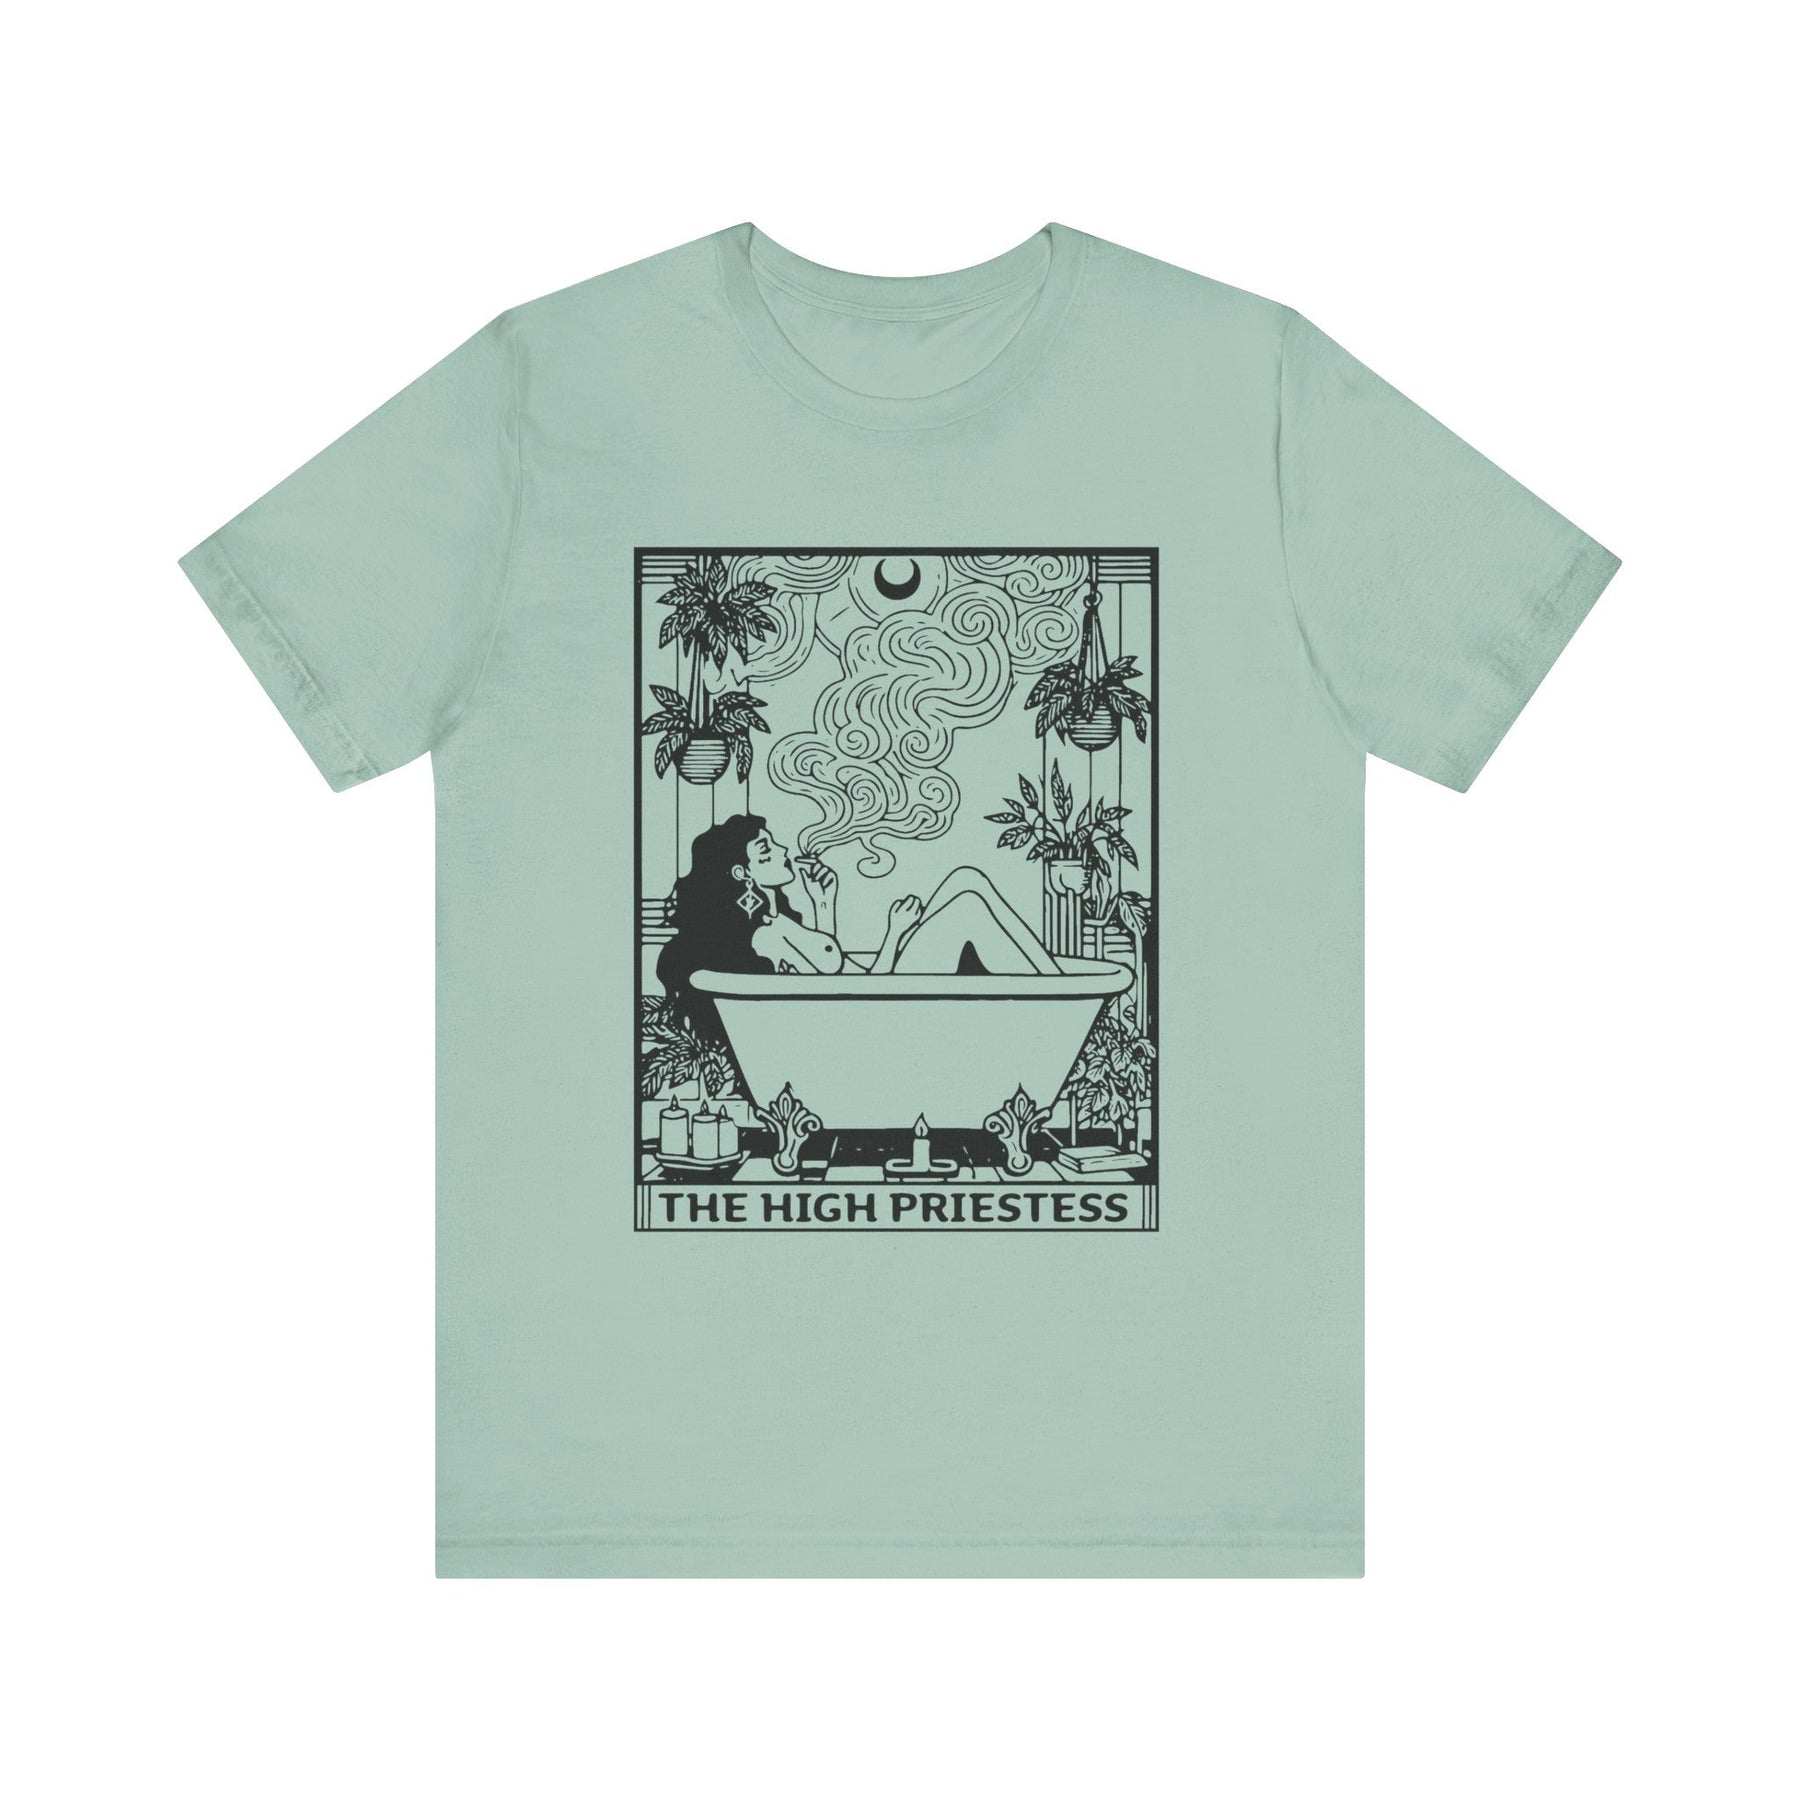 High Priestess Tarot Block Print Short Sleeve Tee - Goth Cloth Co.T - Shirt13632292005886004265